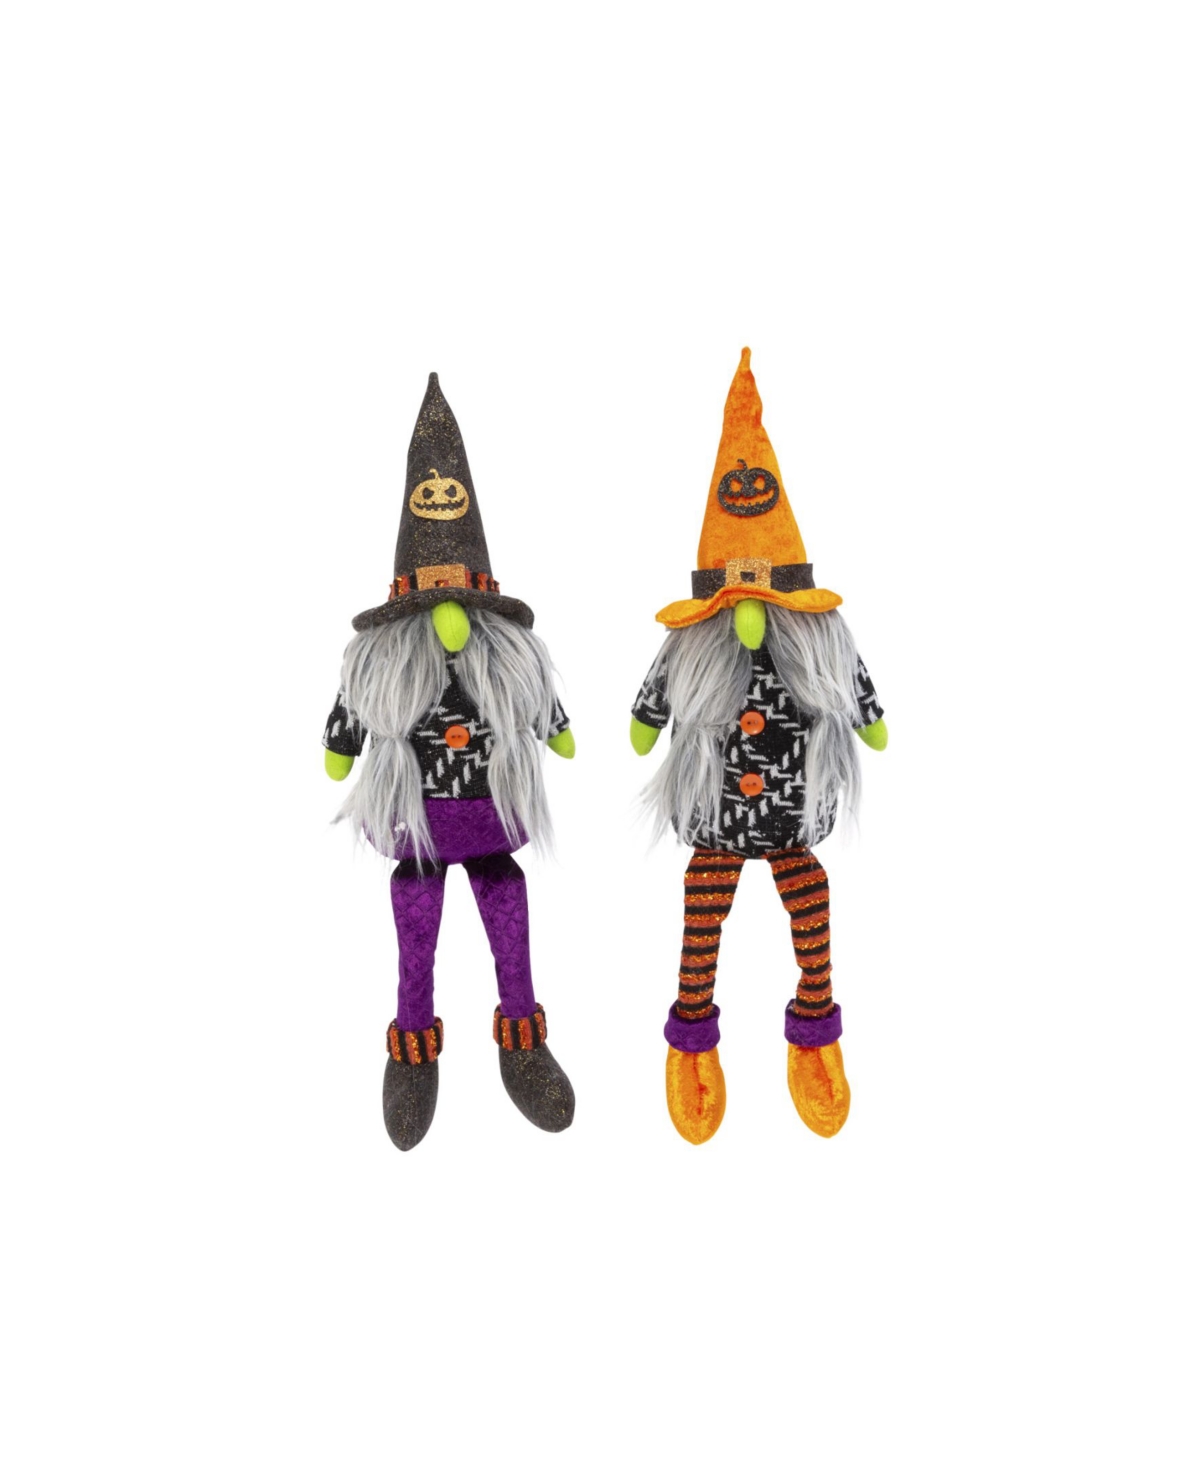 16" Plush Halloween Gnome Shelf Sitter Set, 2 Pieces - Multicolor